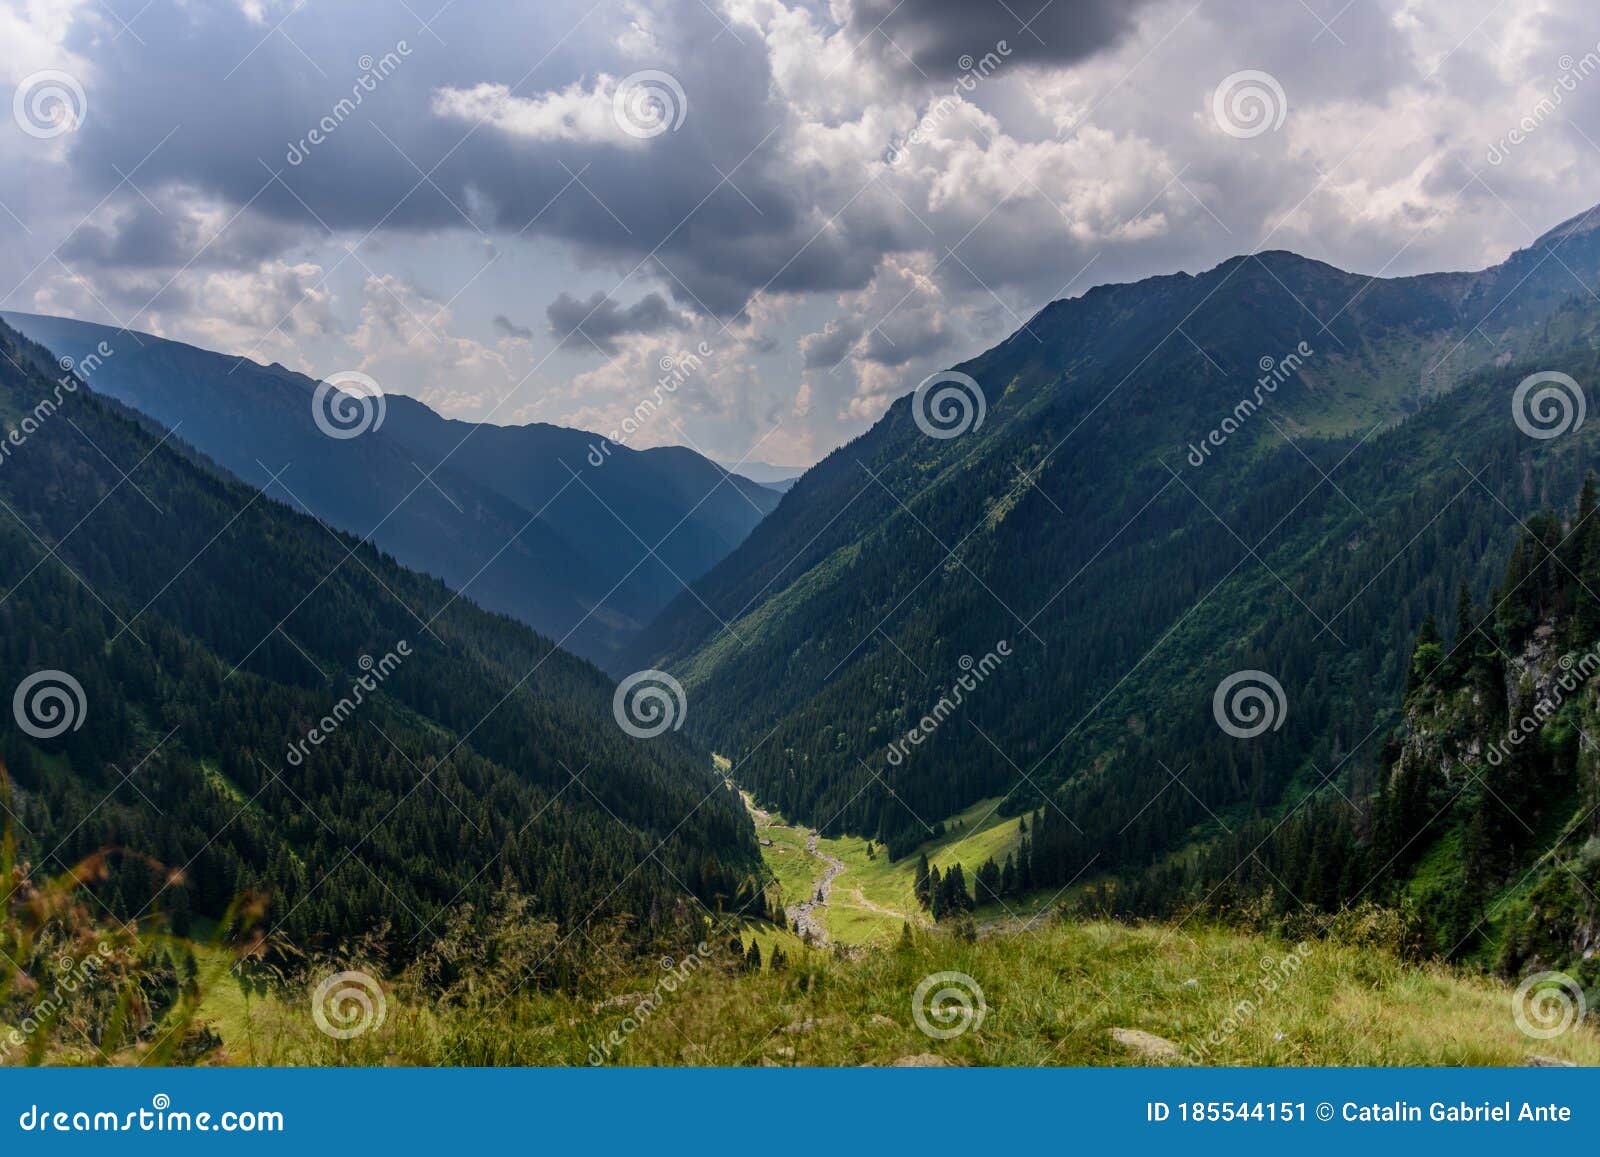 panoramic view over the green and lush summerish valea rea bad valley, fagaras mountain